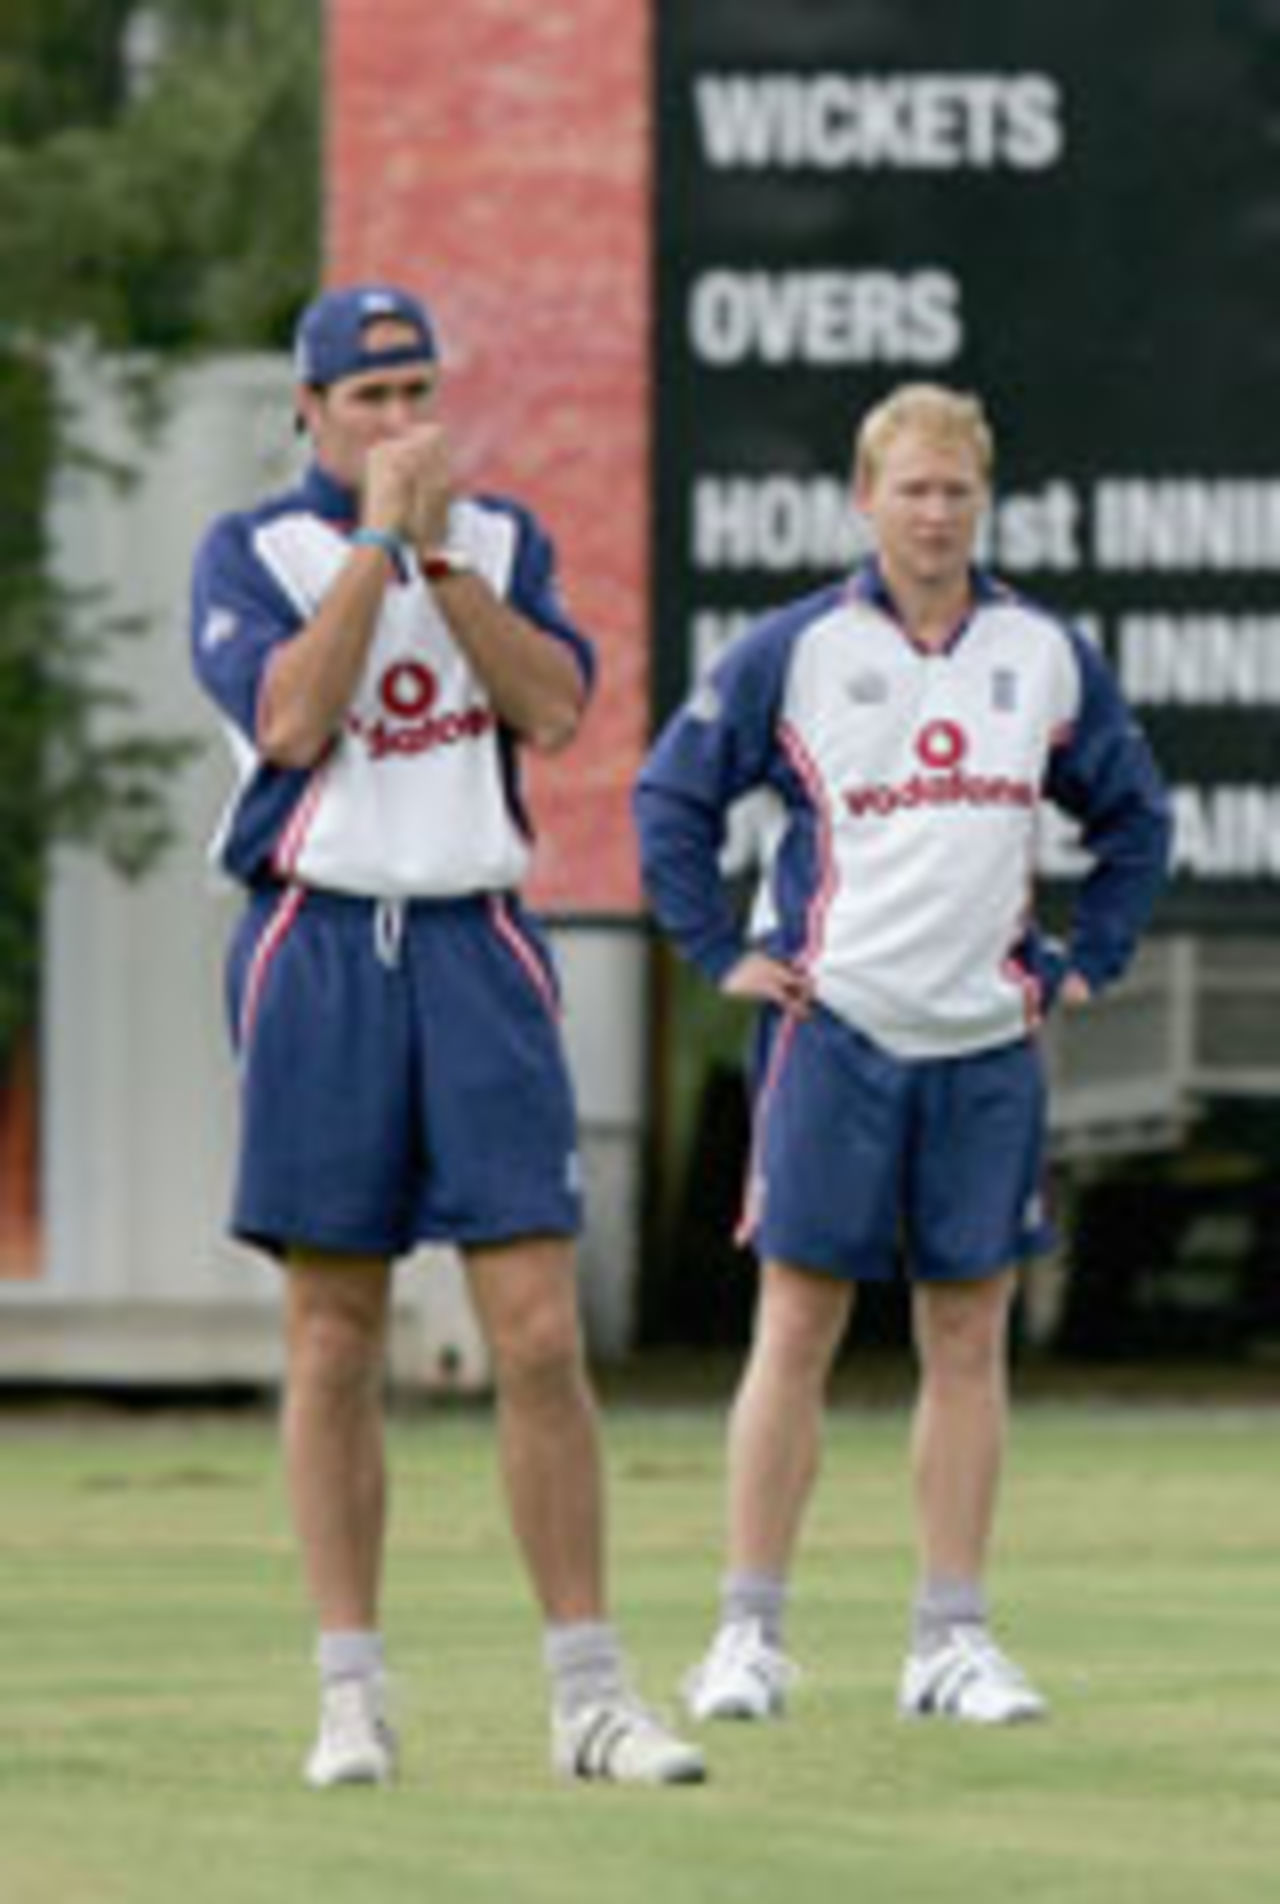 Michael Vaughan and Gareth Batty in training at Windhoek in Namibia, November 17 2004